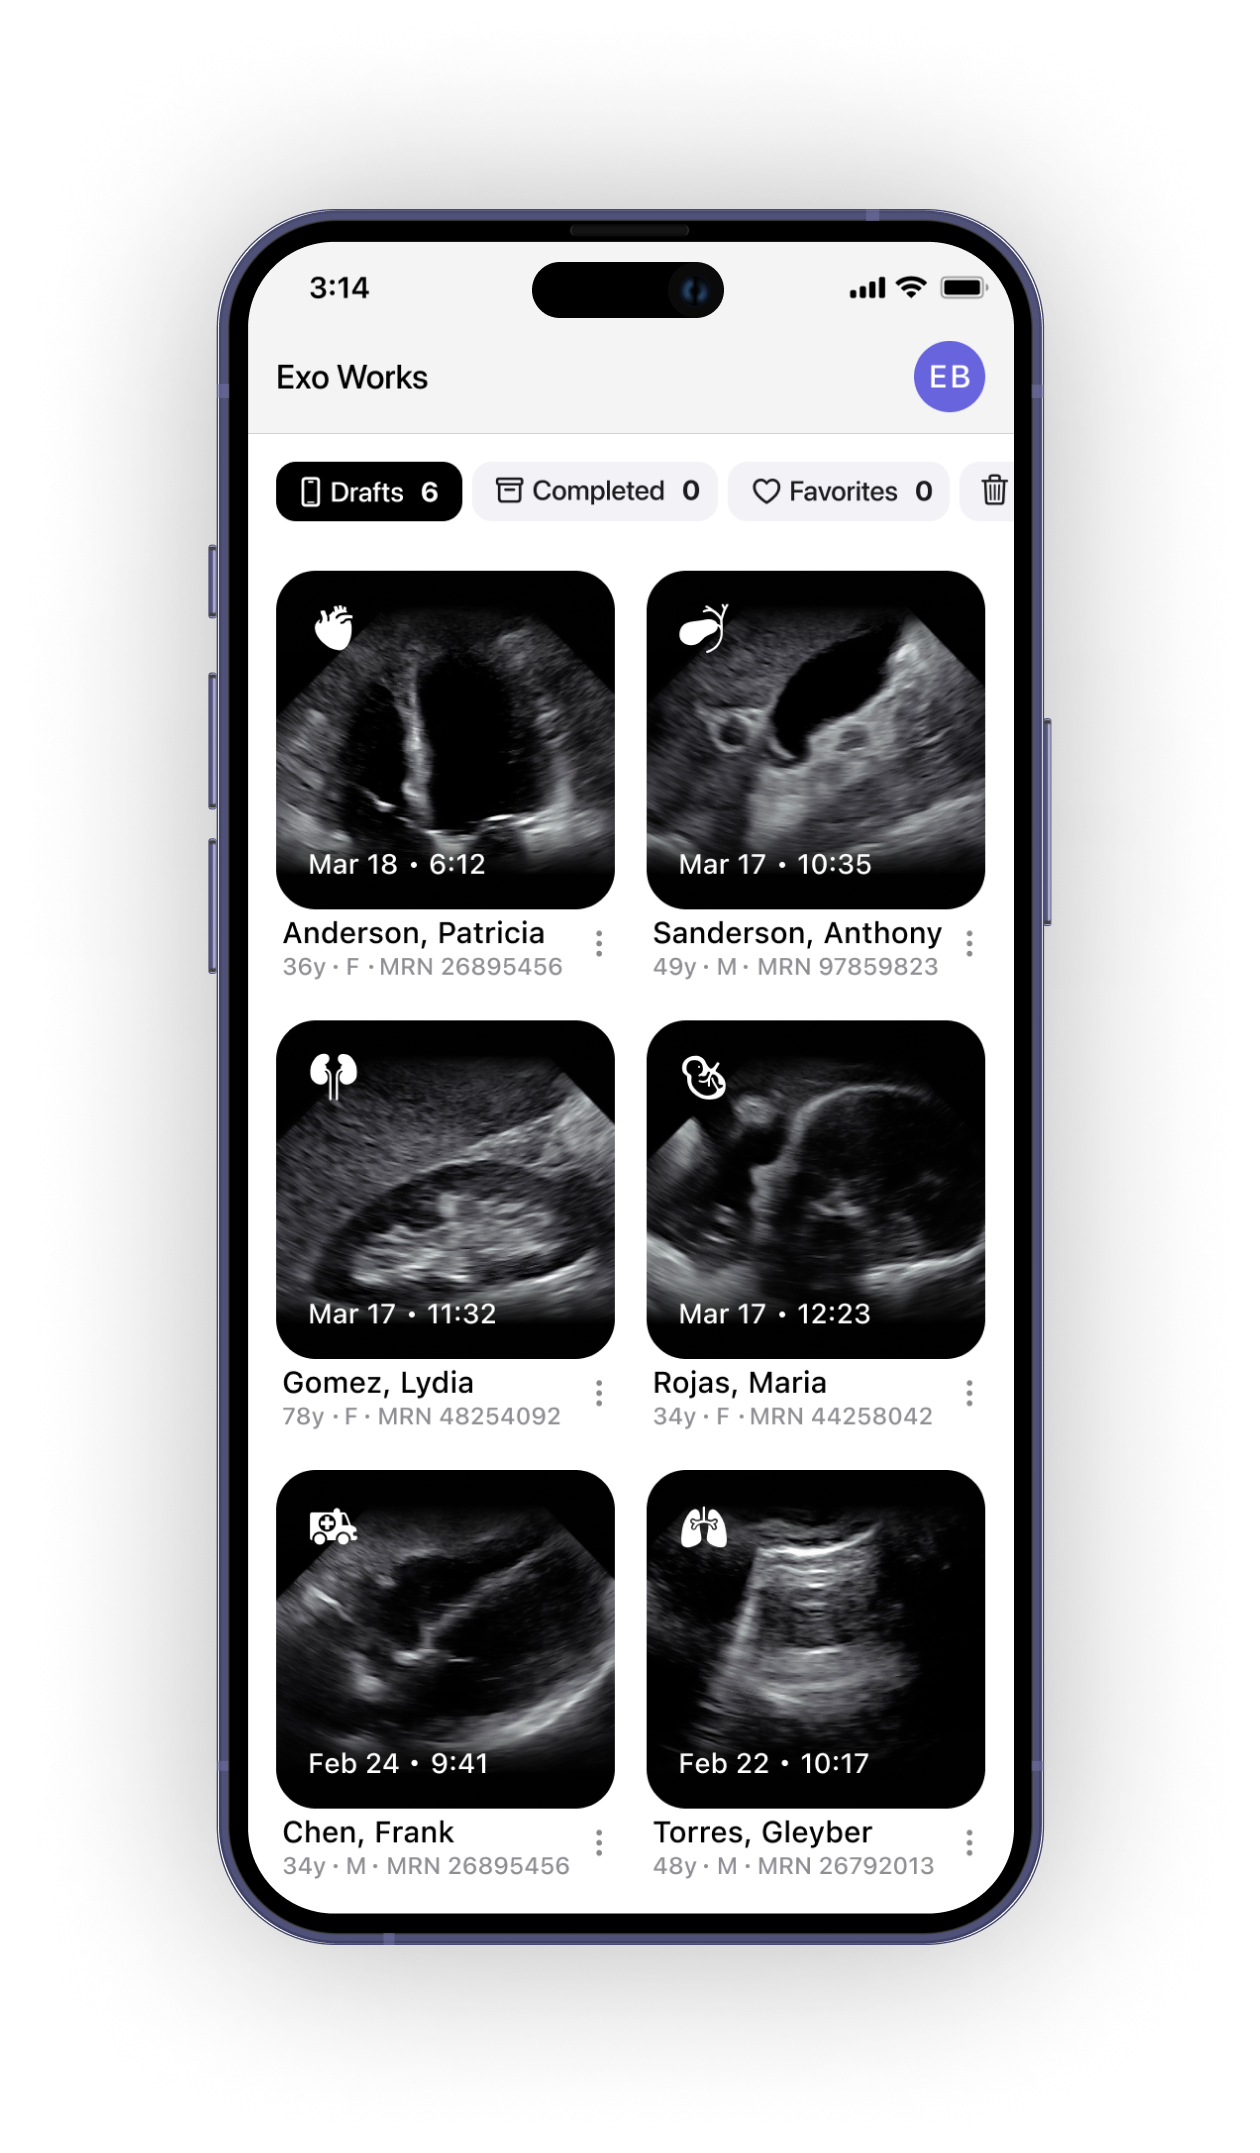 Phone running the Exo app displaying an ultrasound